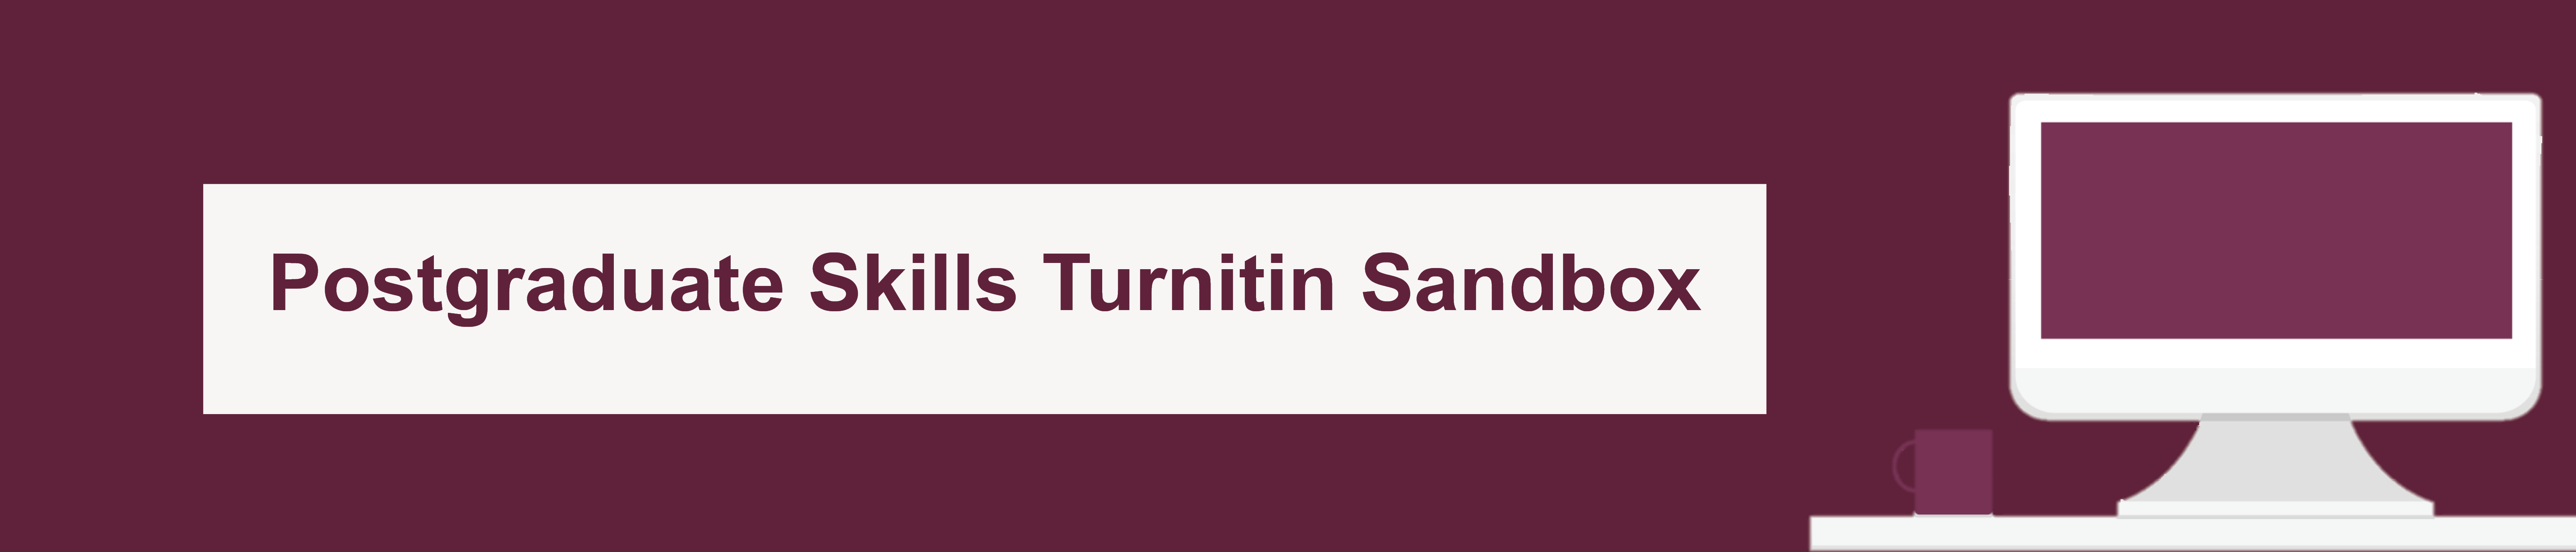 Banner for postgraduate skills turnitin sandbox.png